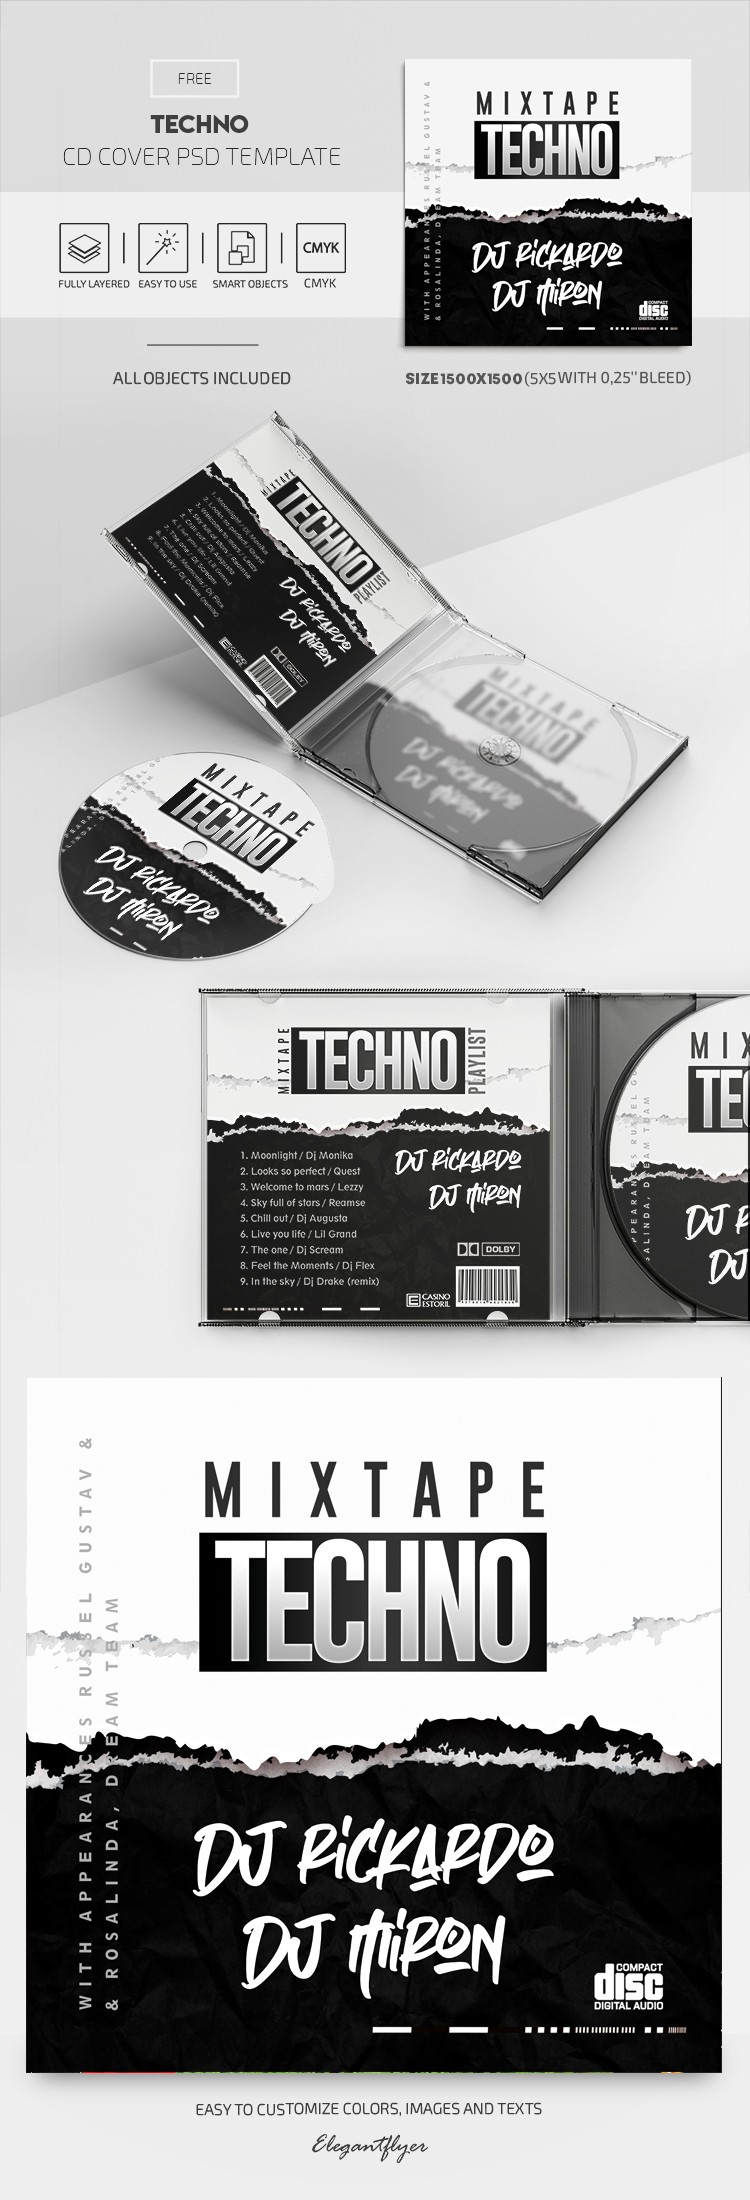 Techno CD Cover by ElegantFlyer